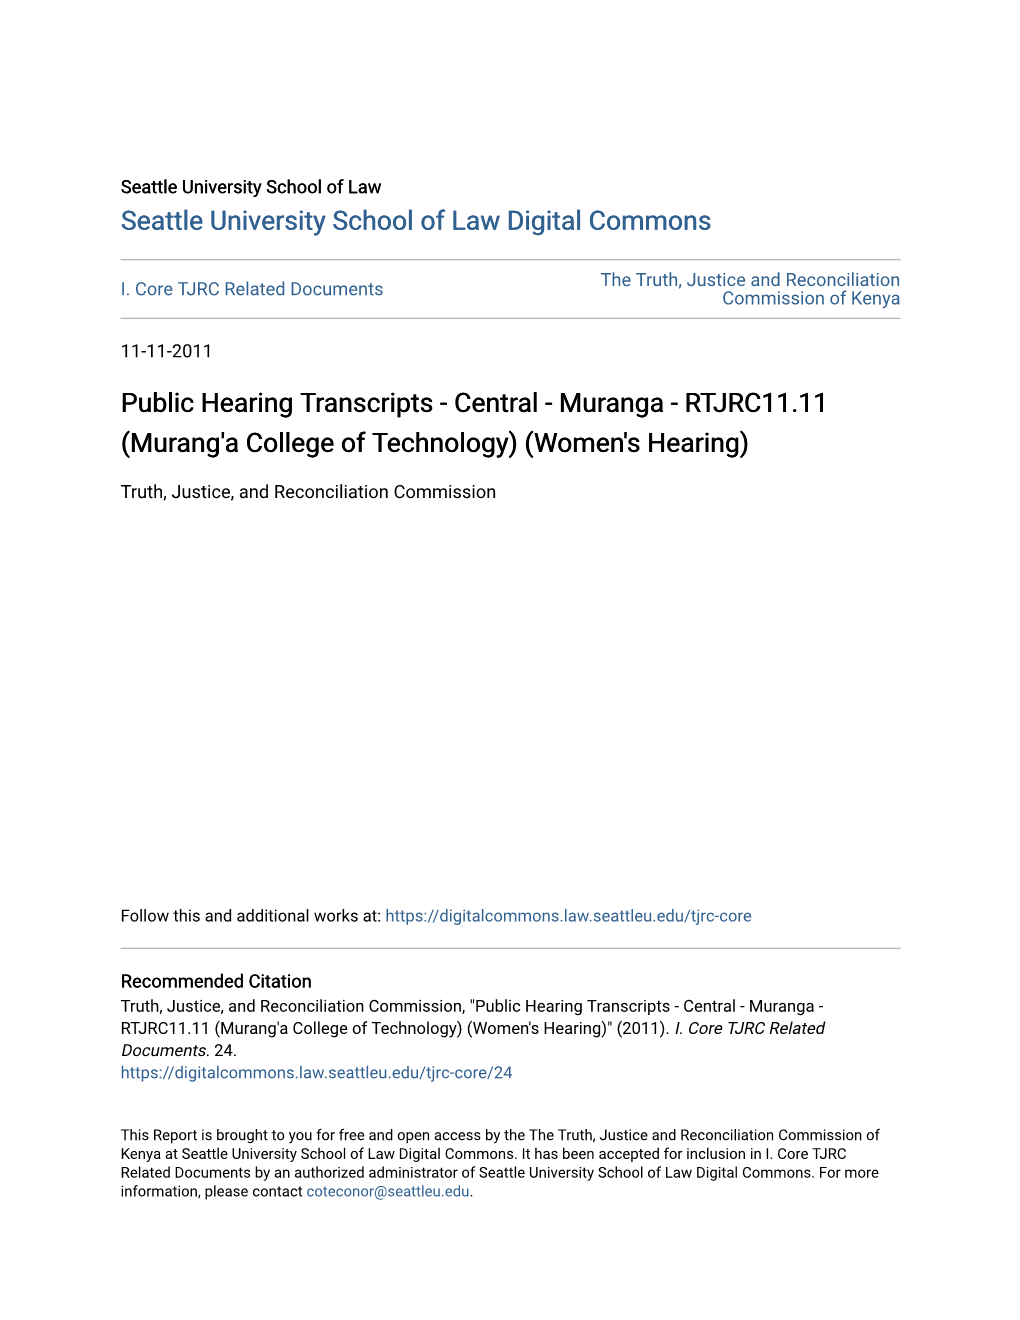 RTJRC11.11 (Murang'a College of Technology) (Women's Hearing)